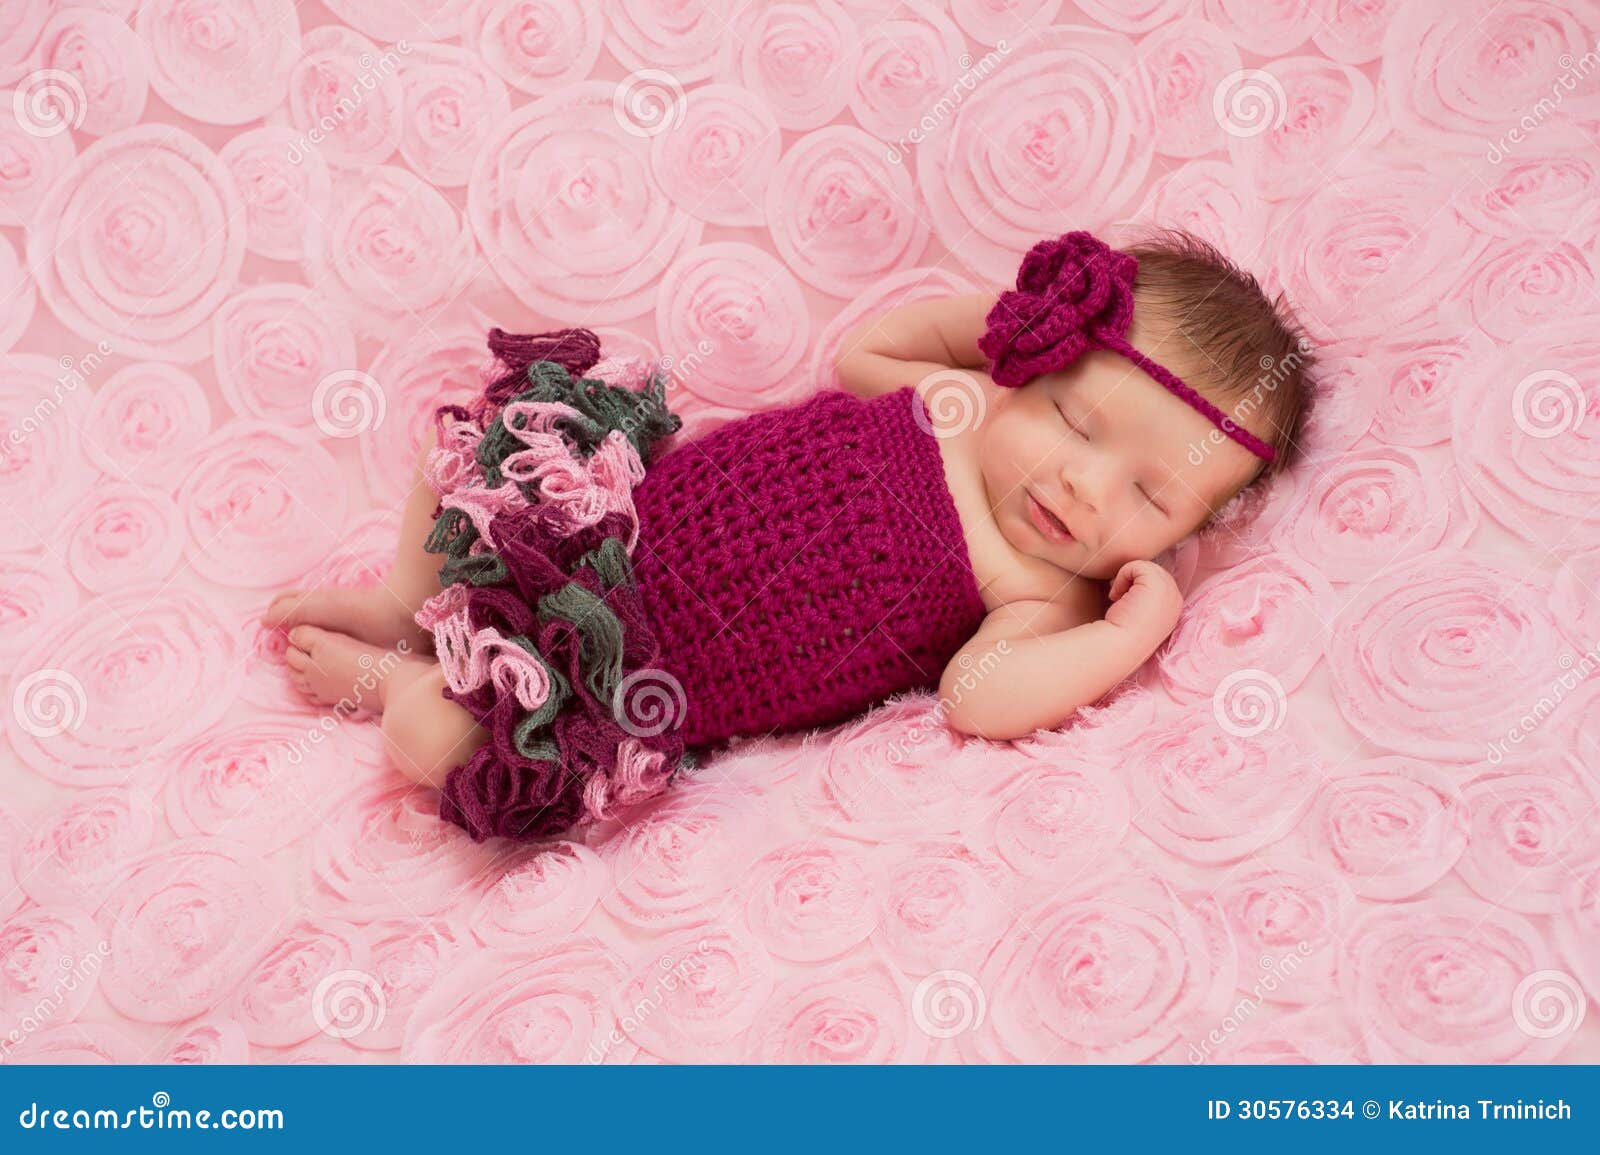 newborn baby girl wearing a crocheted romper